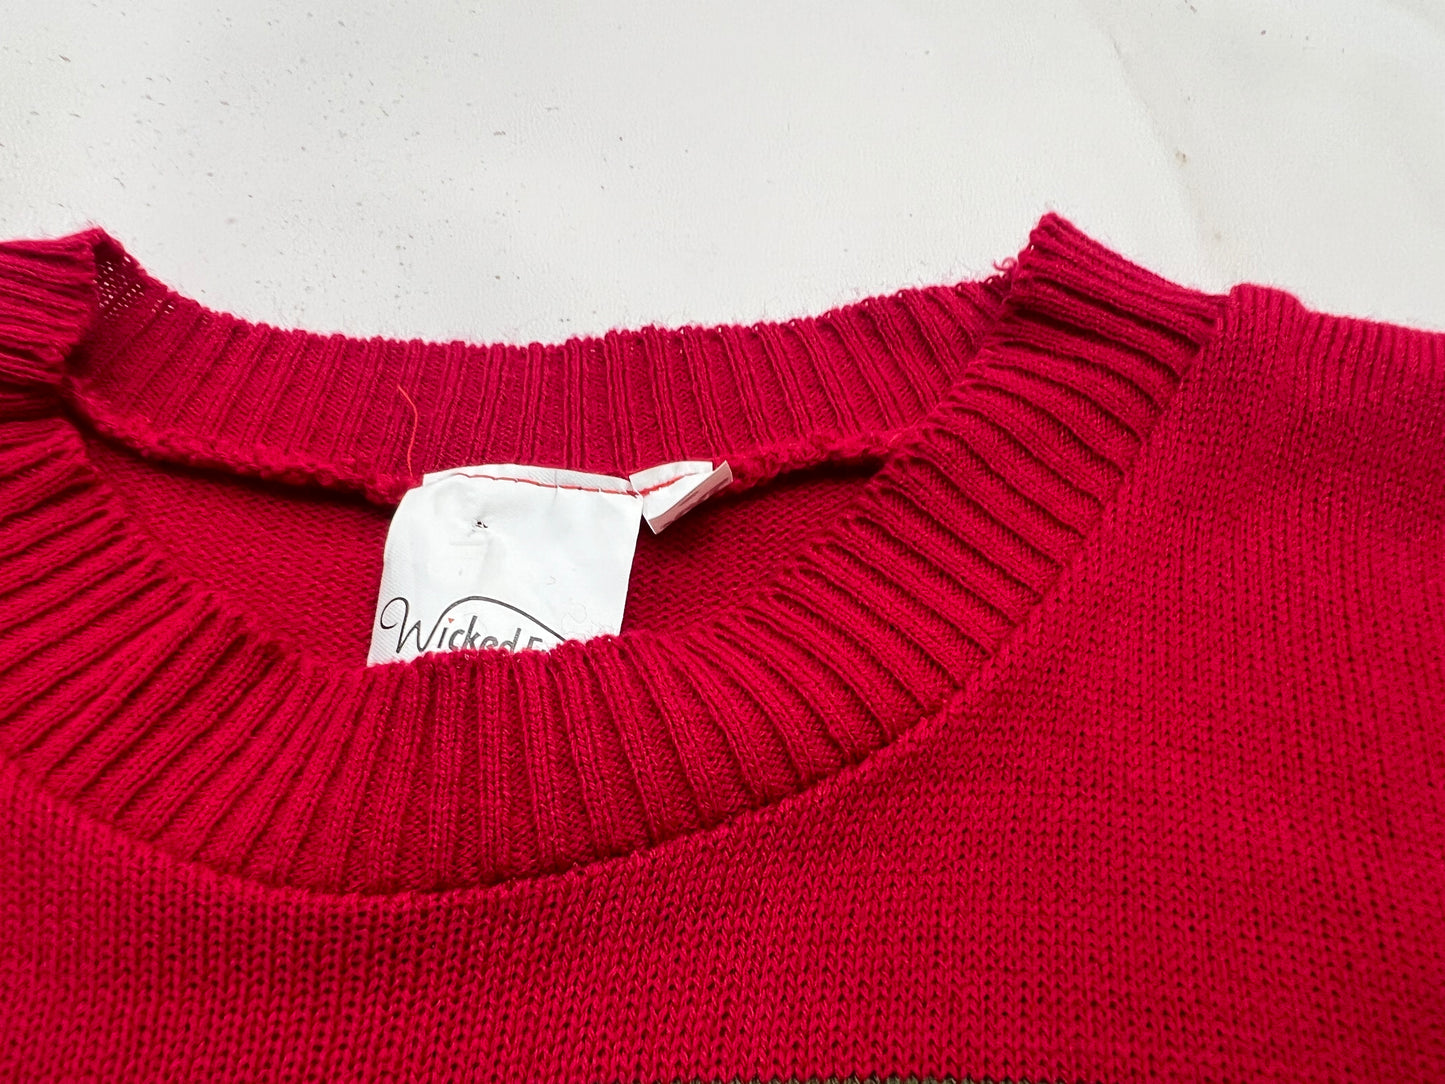 Pull tricoté Freddy rouge/vert